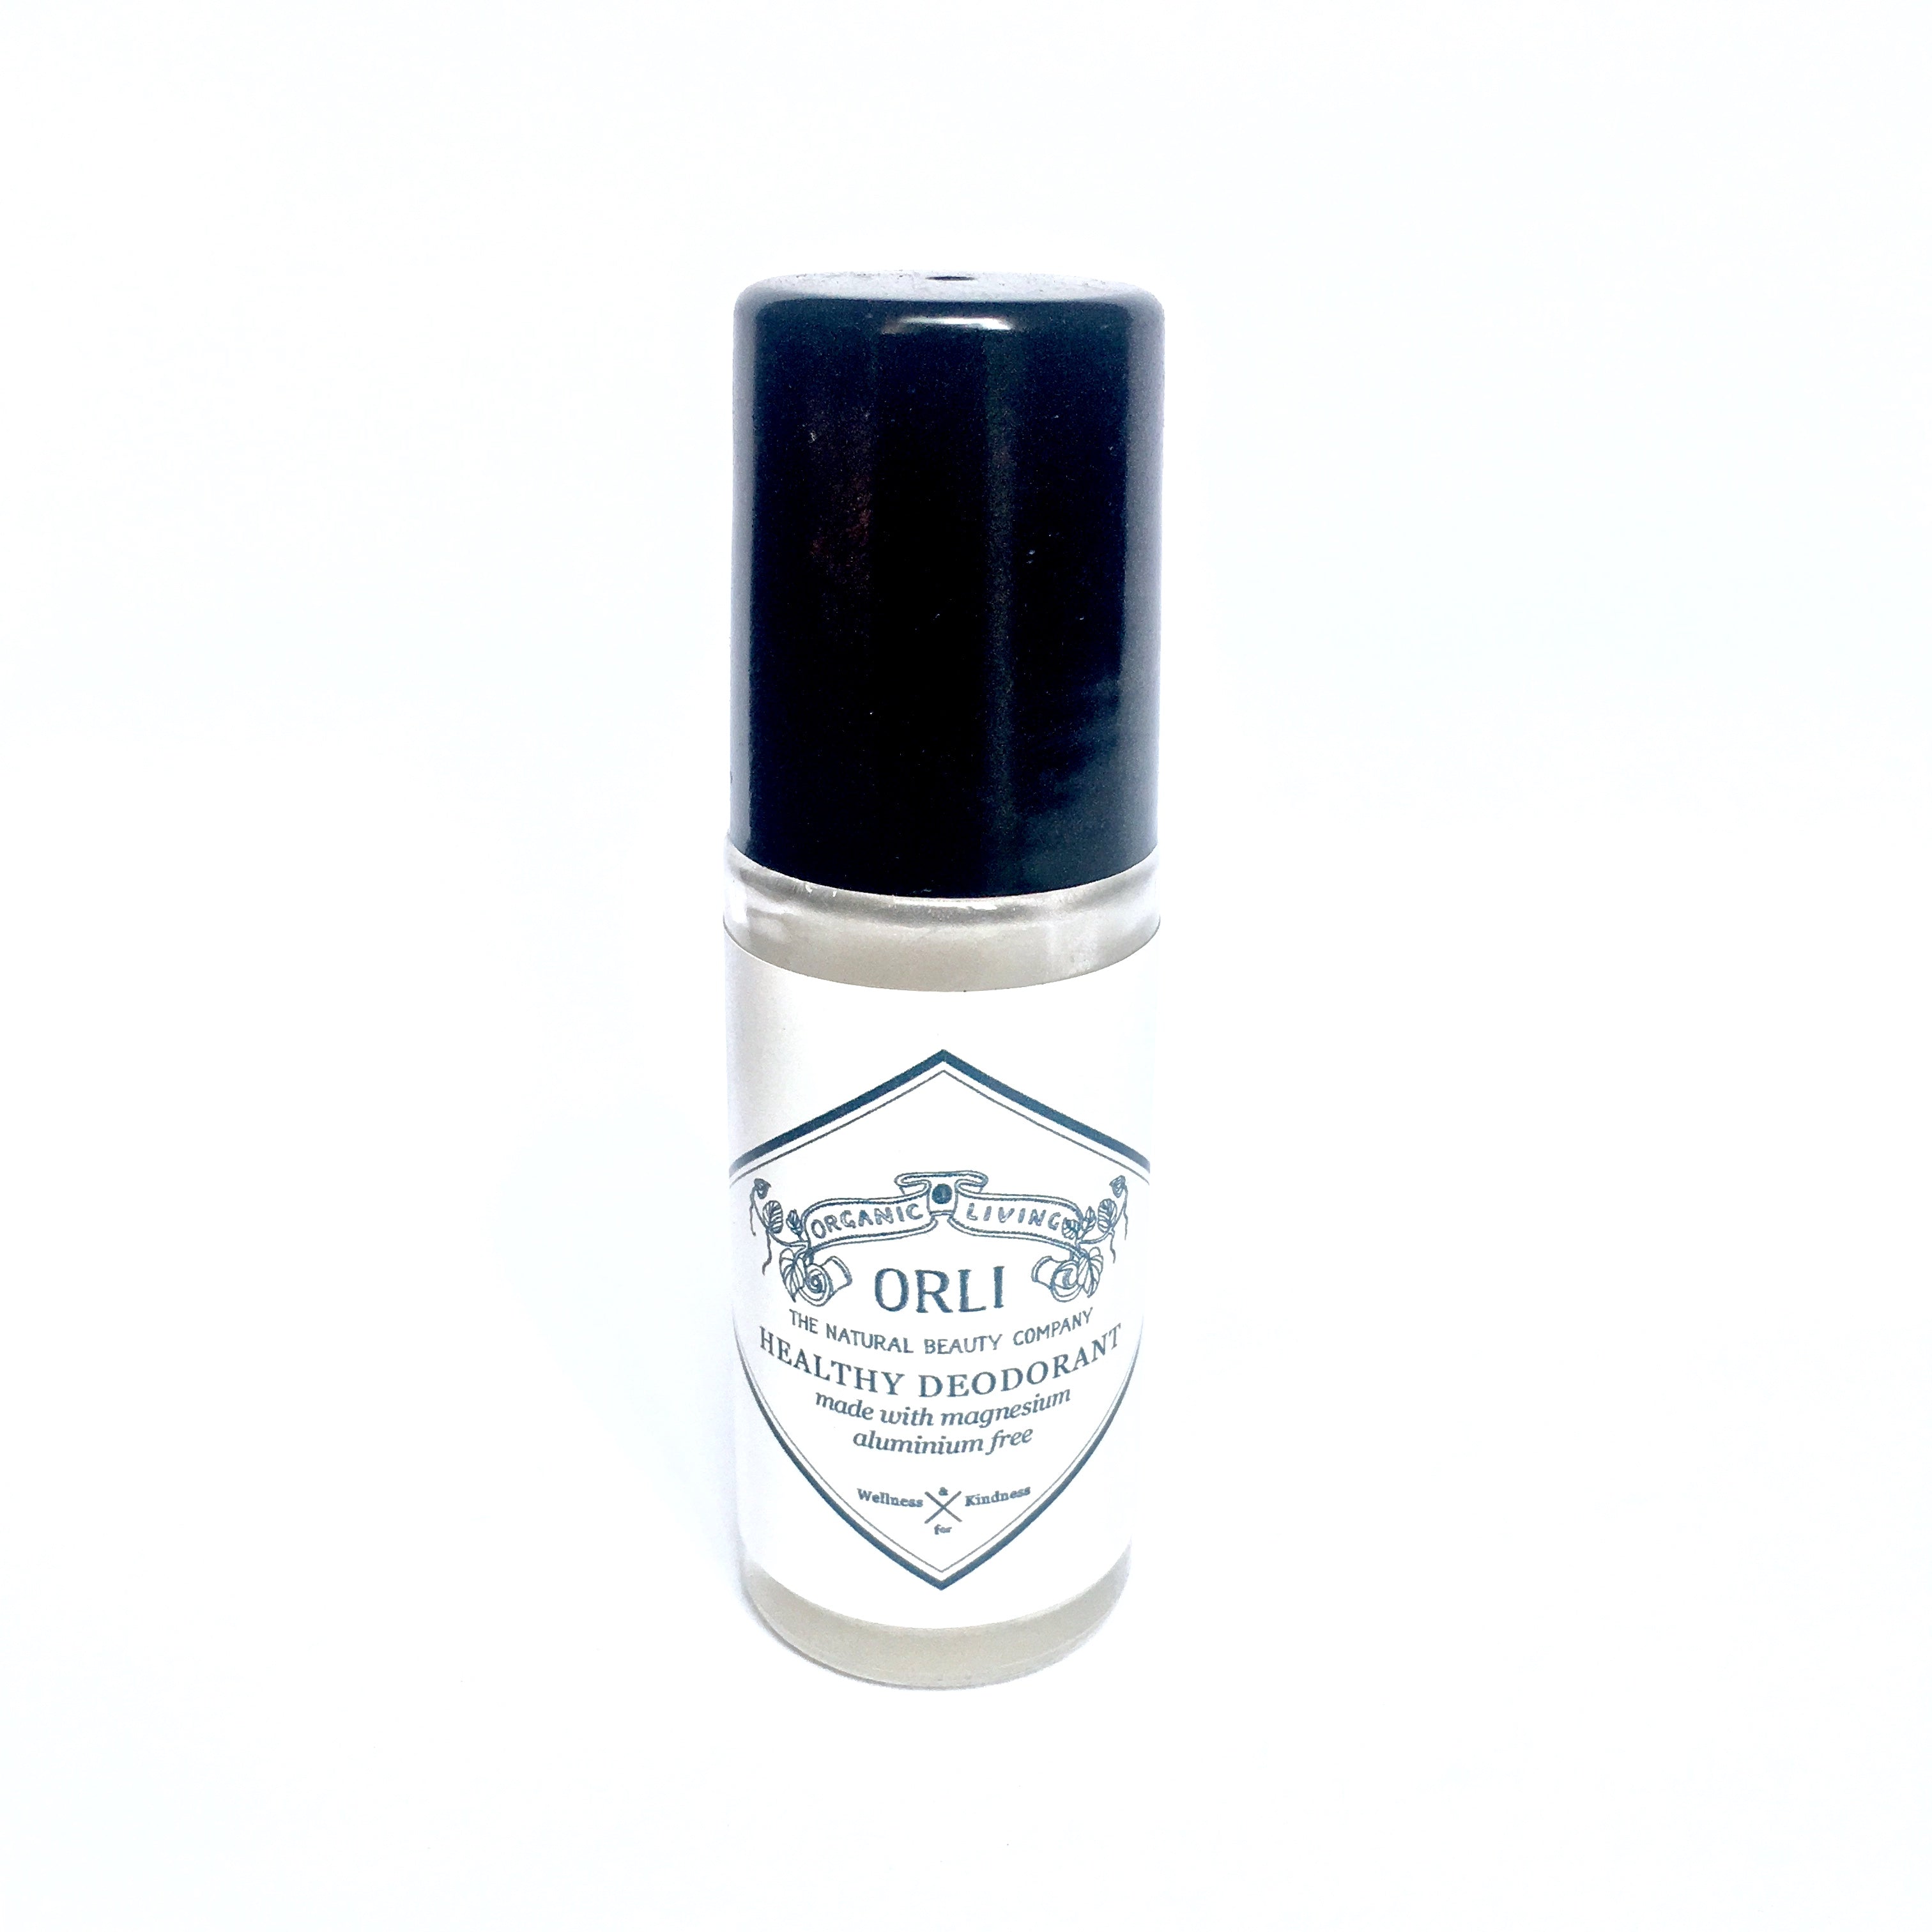 orli natural beauty and skincare australia healthy bi-carb and aluminium free natural and organic deodorant